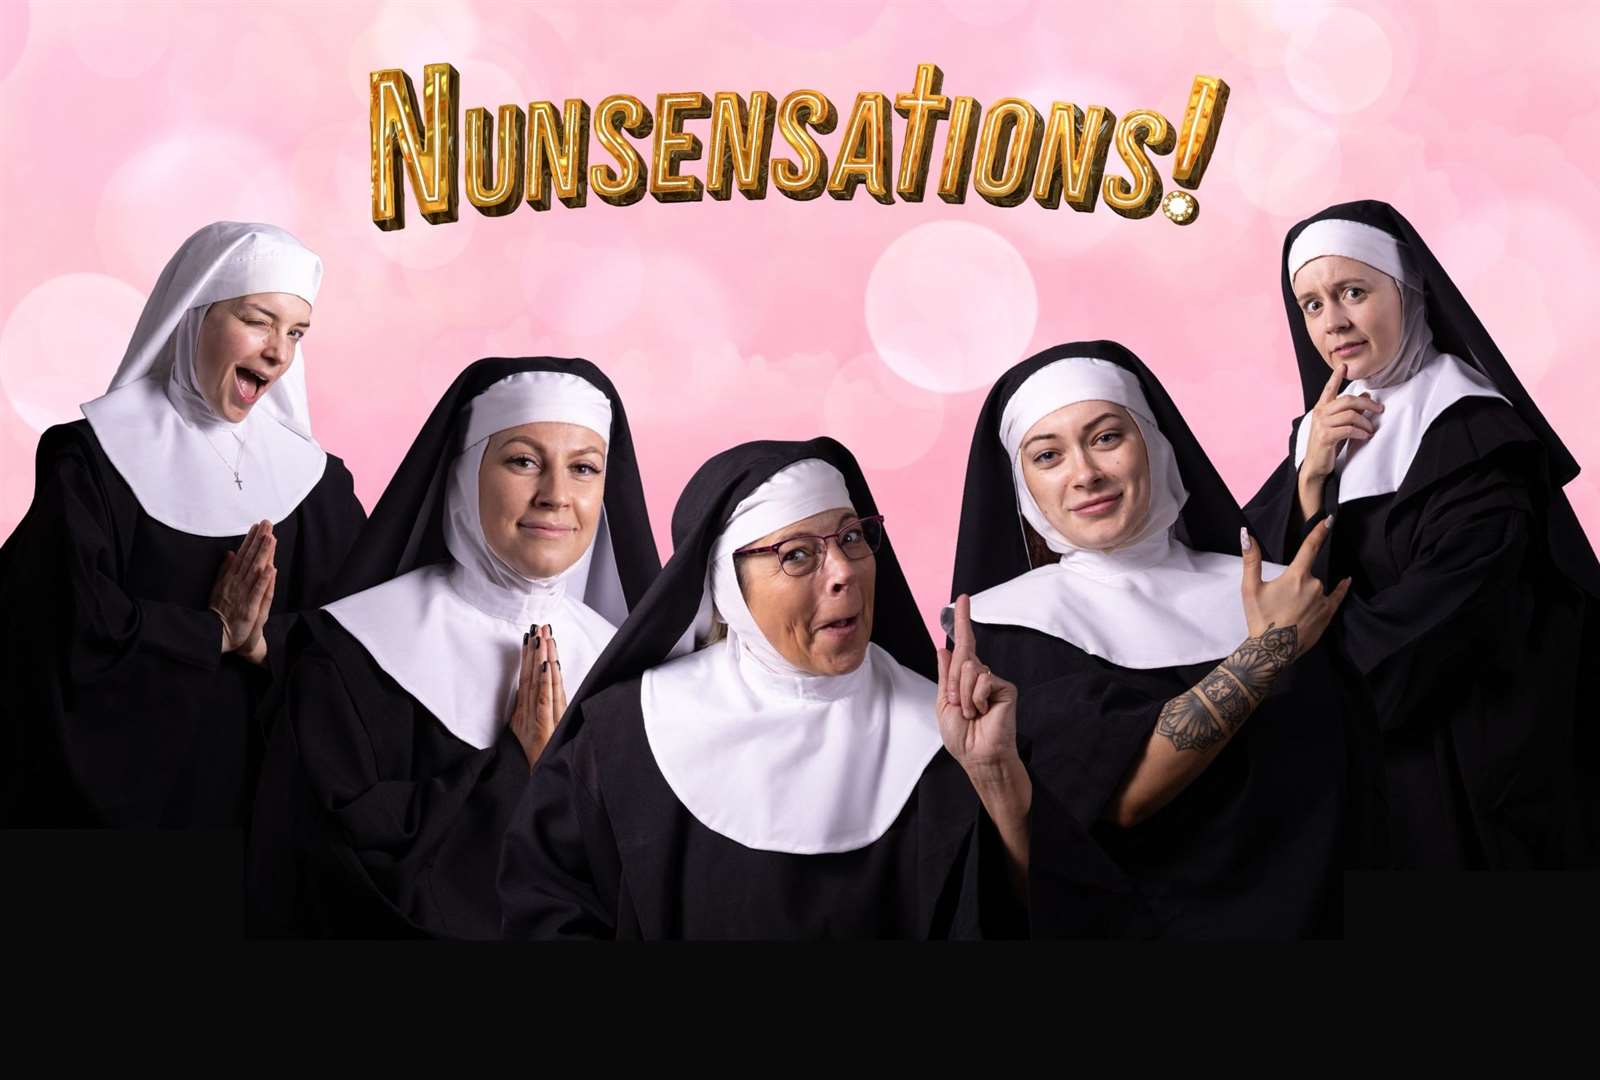 Nunsensations opens on Wednesday.